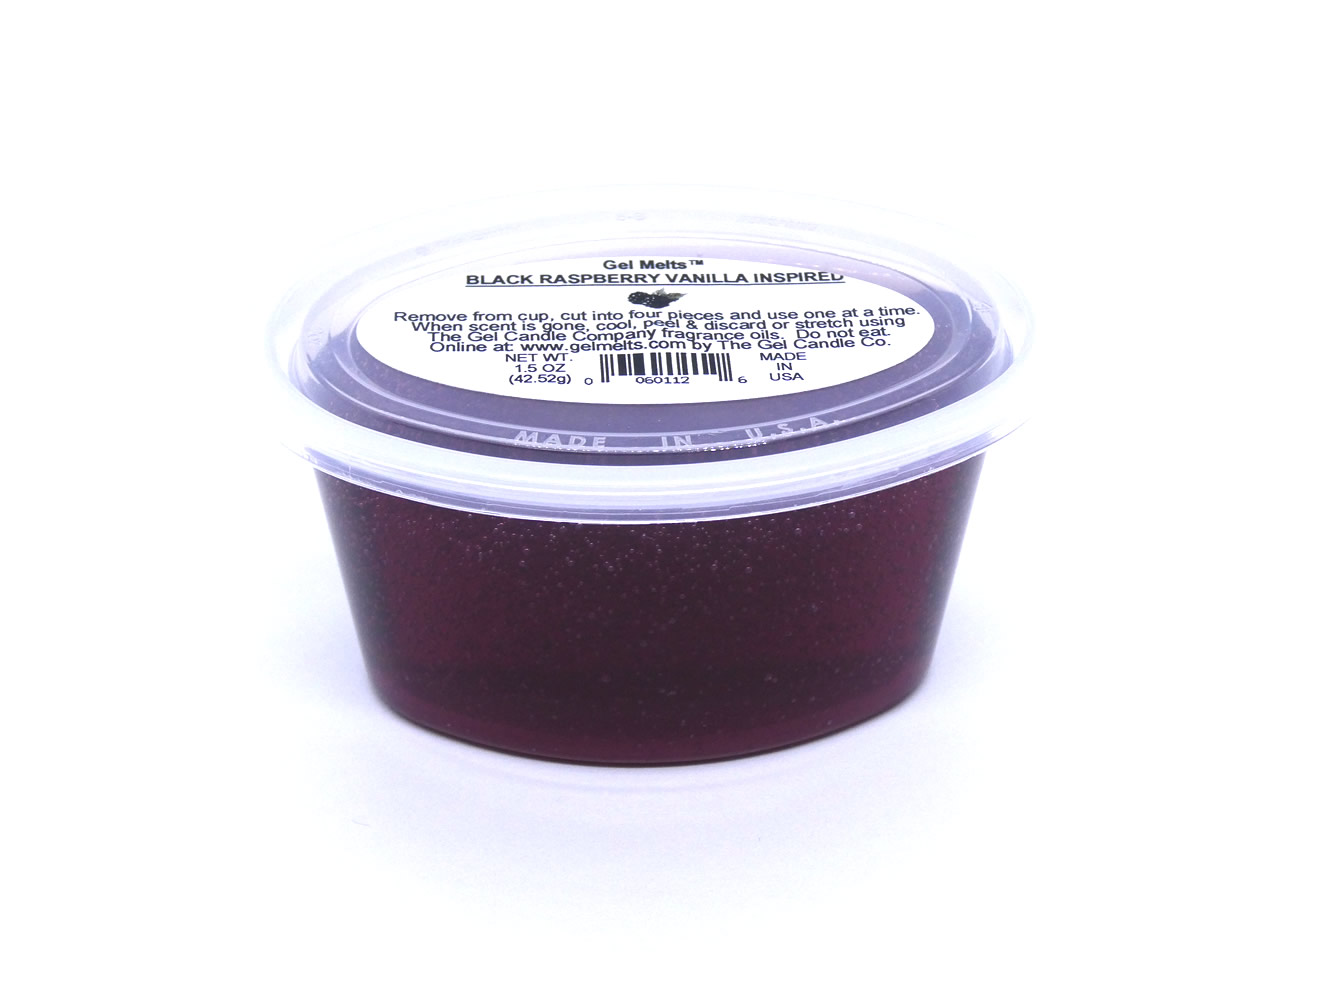 Black Raspberry Vanilla Inspired Gel Melts™ for warmers - 3 pack